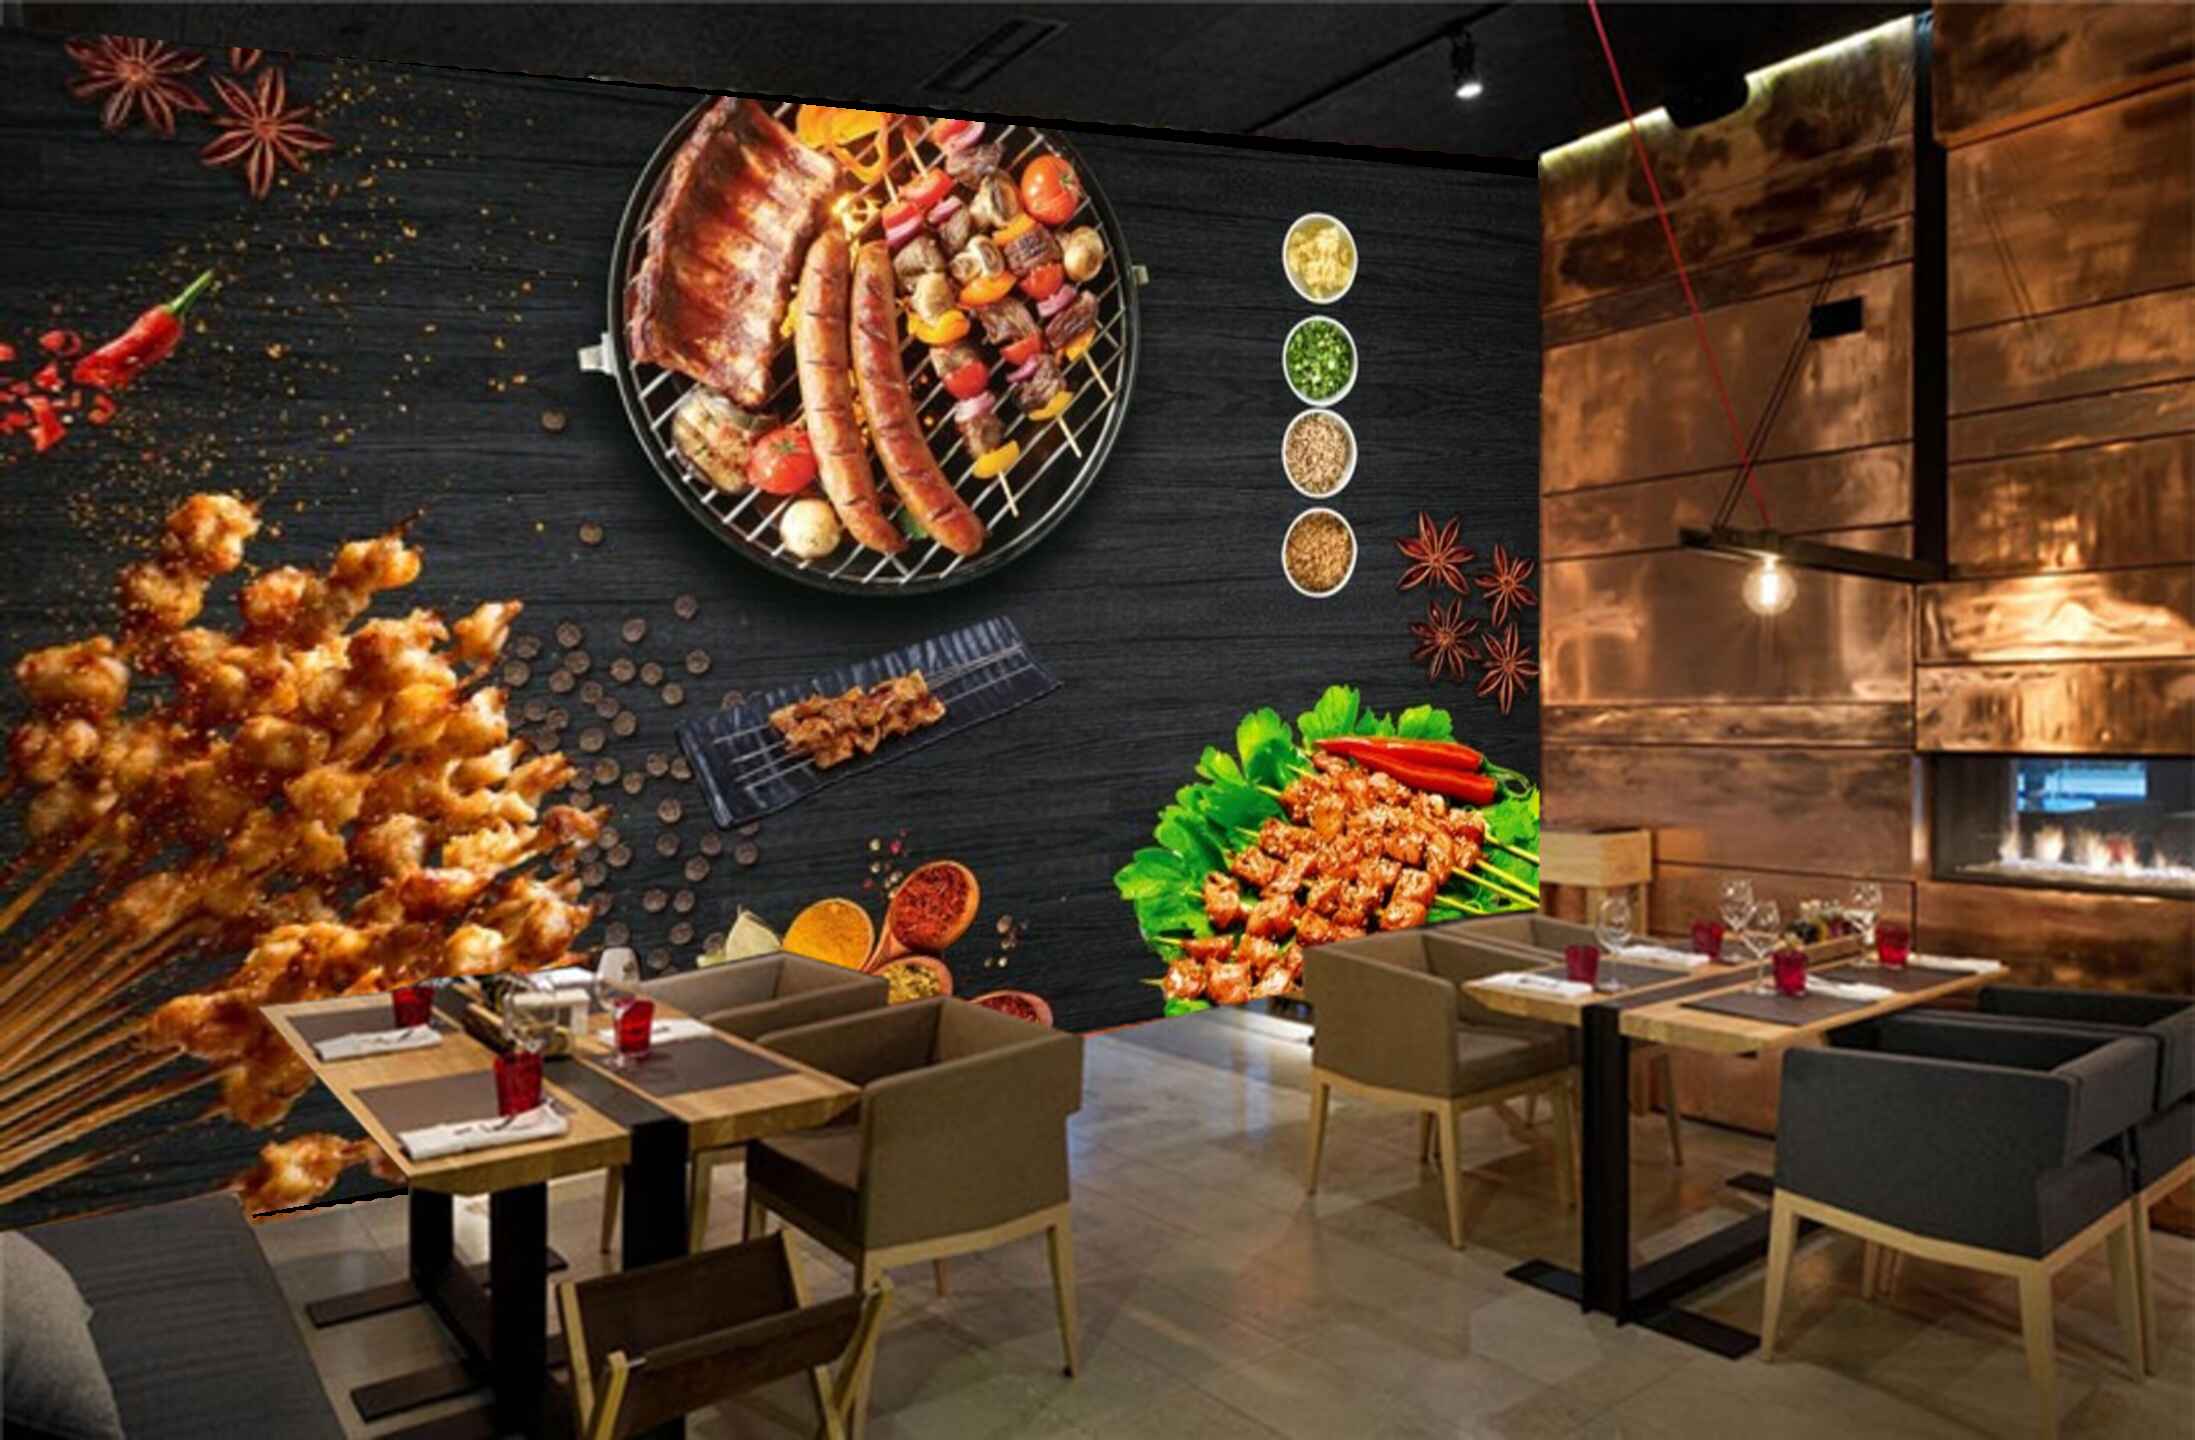 Avikalp MWZ3152 Chickn Meat Drum Sticks Spices HD Wallpaper for Cafe Restaurant